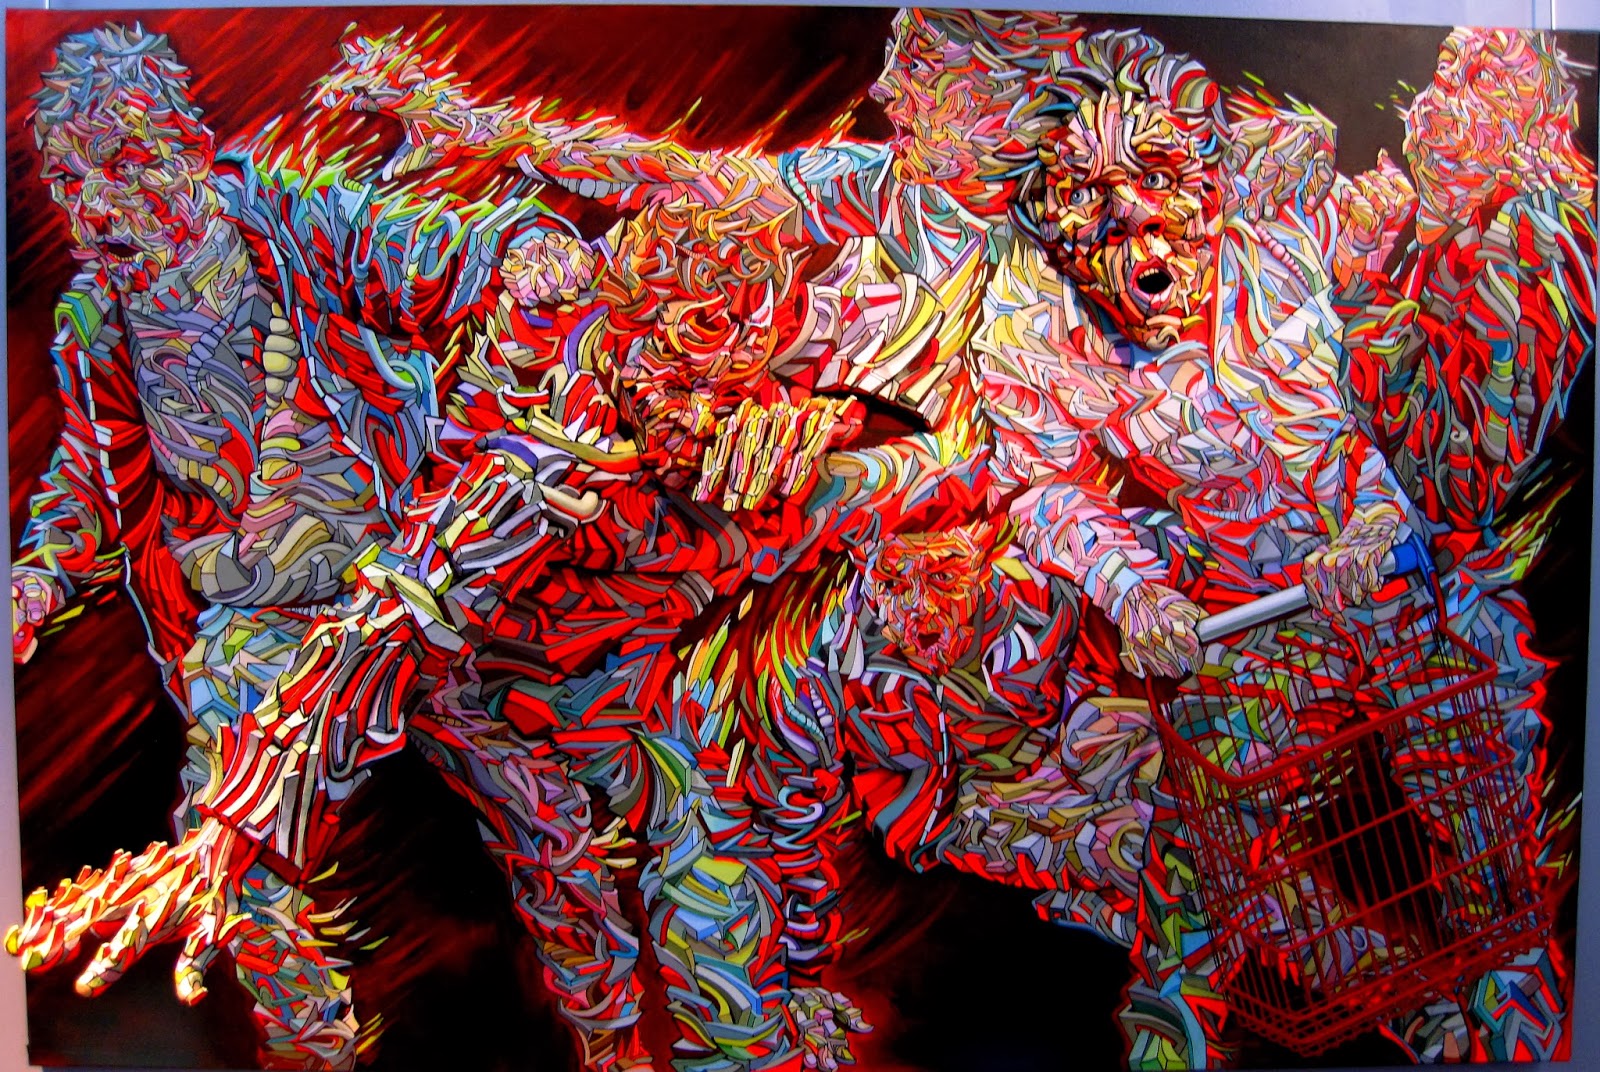 Shaka (Marchal Mithouard): Psychedelic Graffiti Artist1600 x 1072